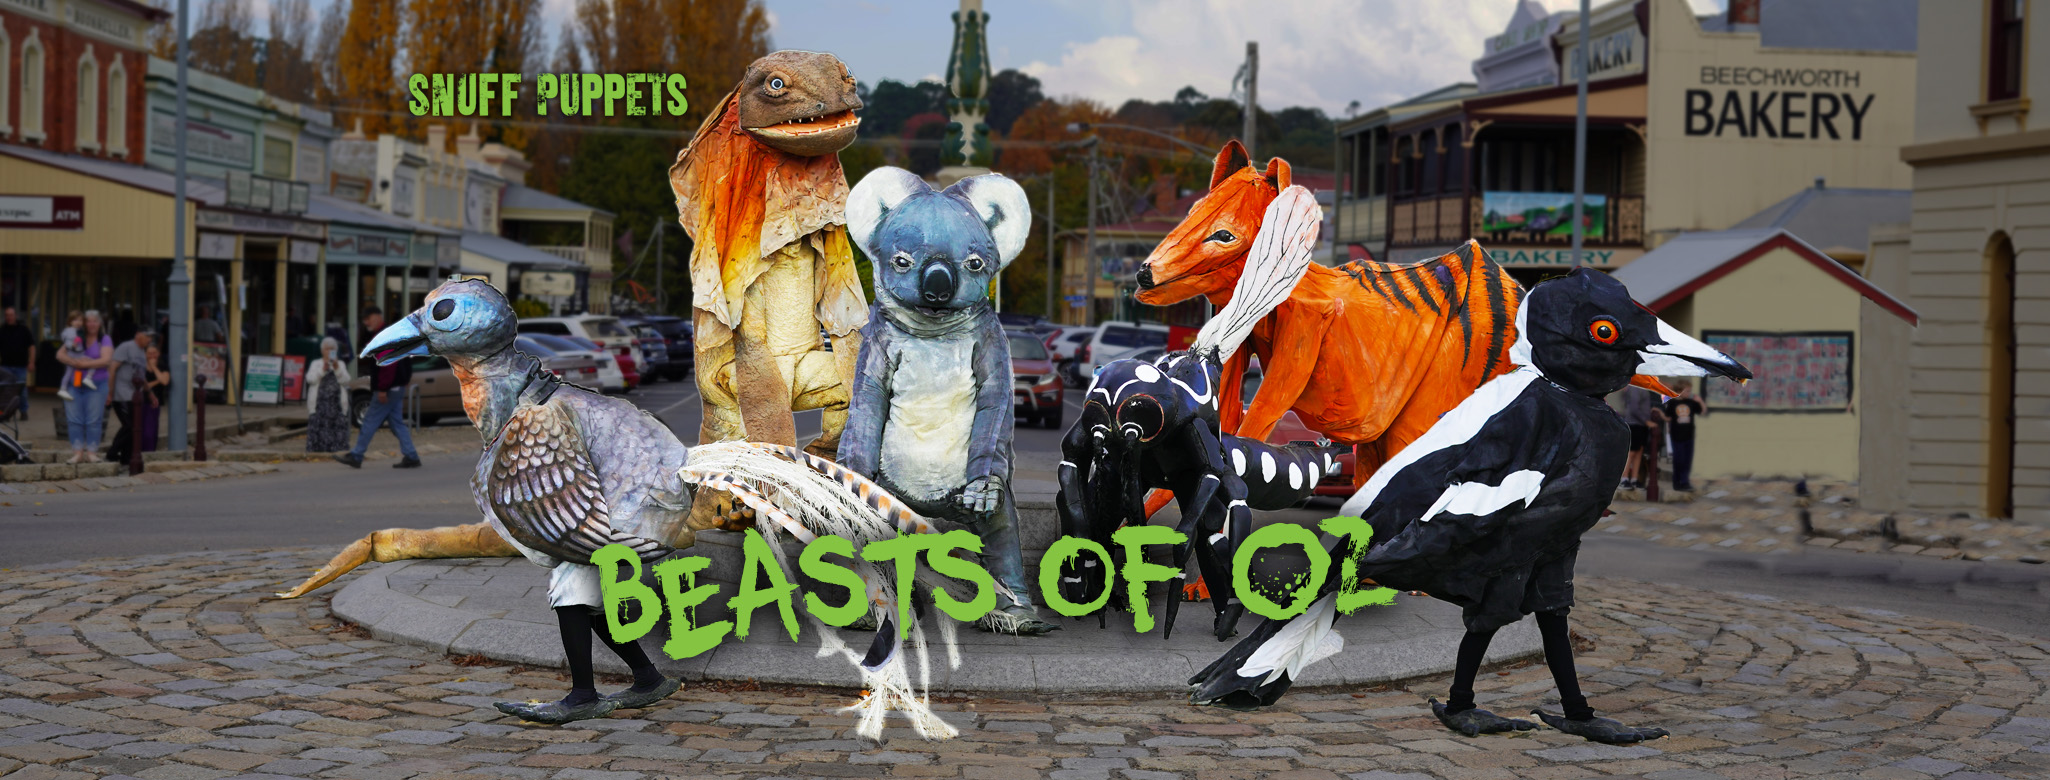 Beasts Of Oz